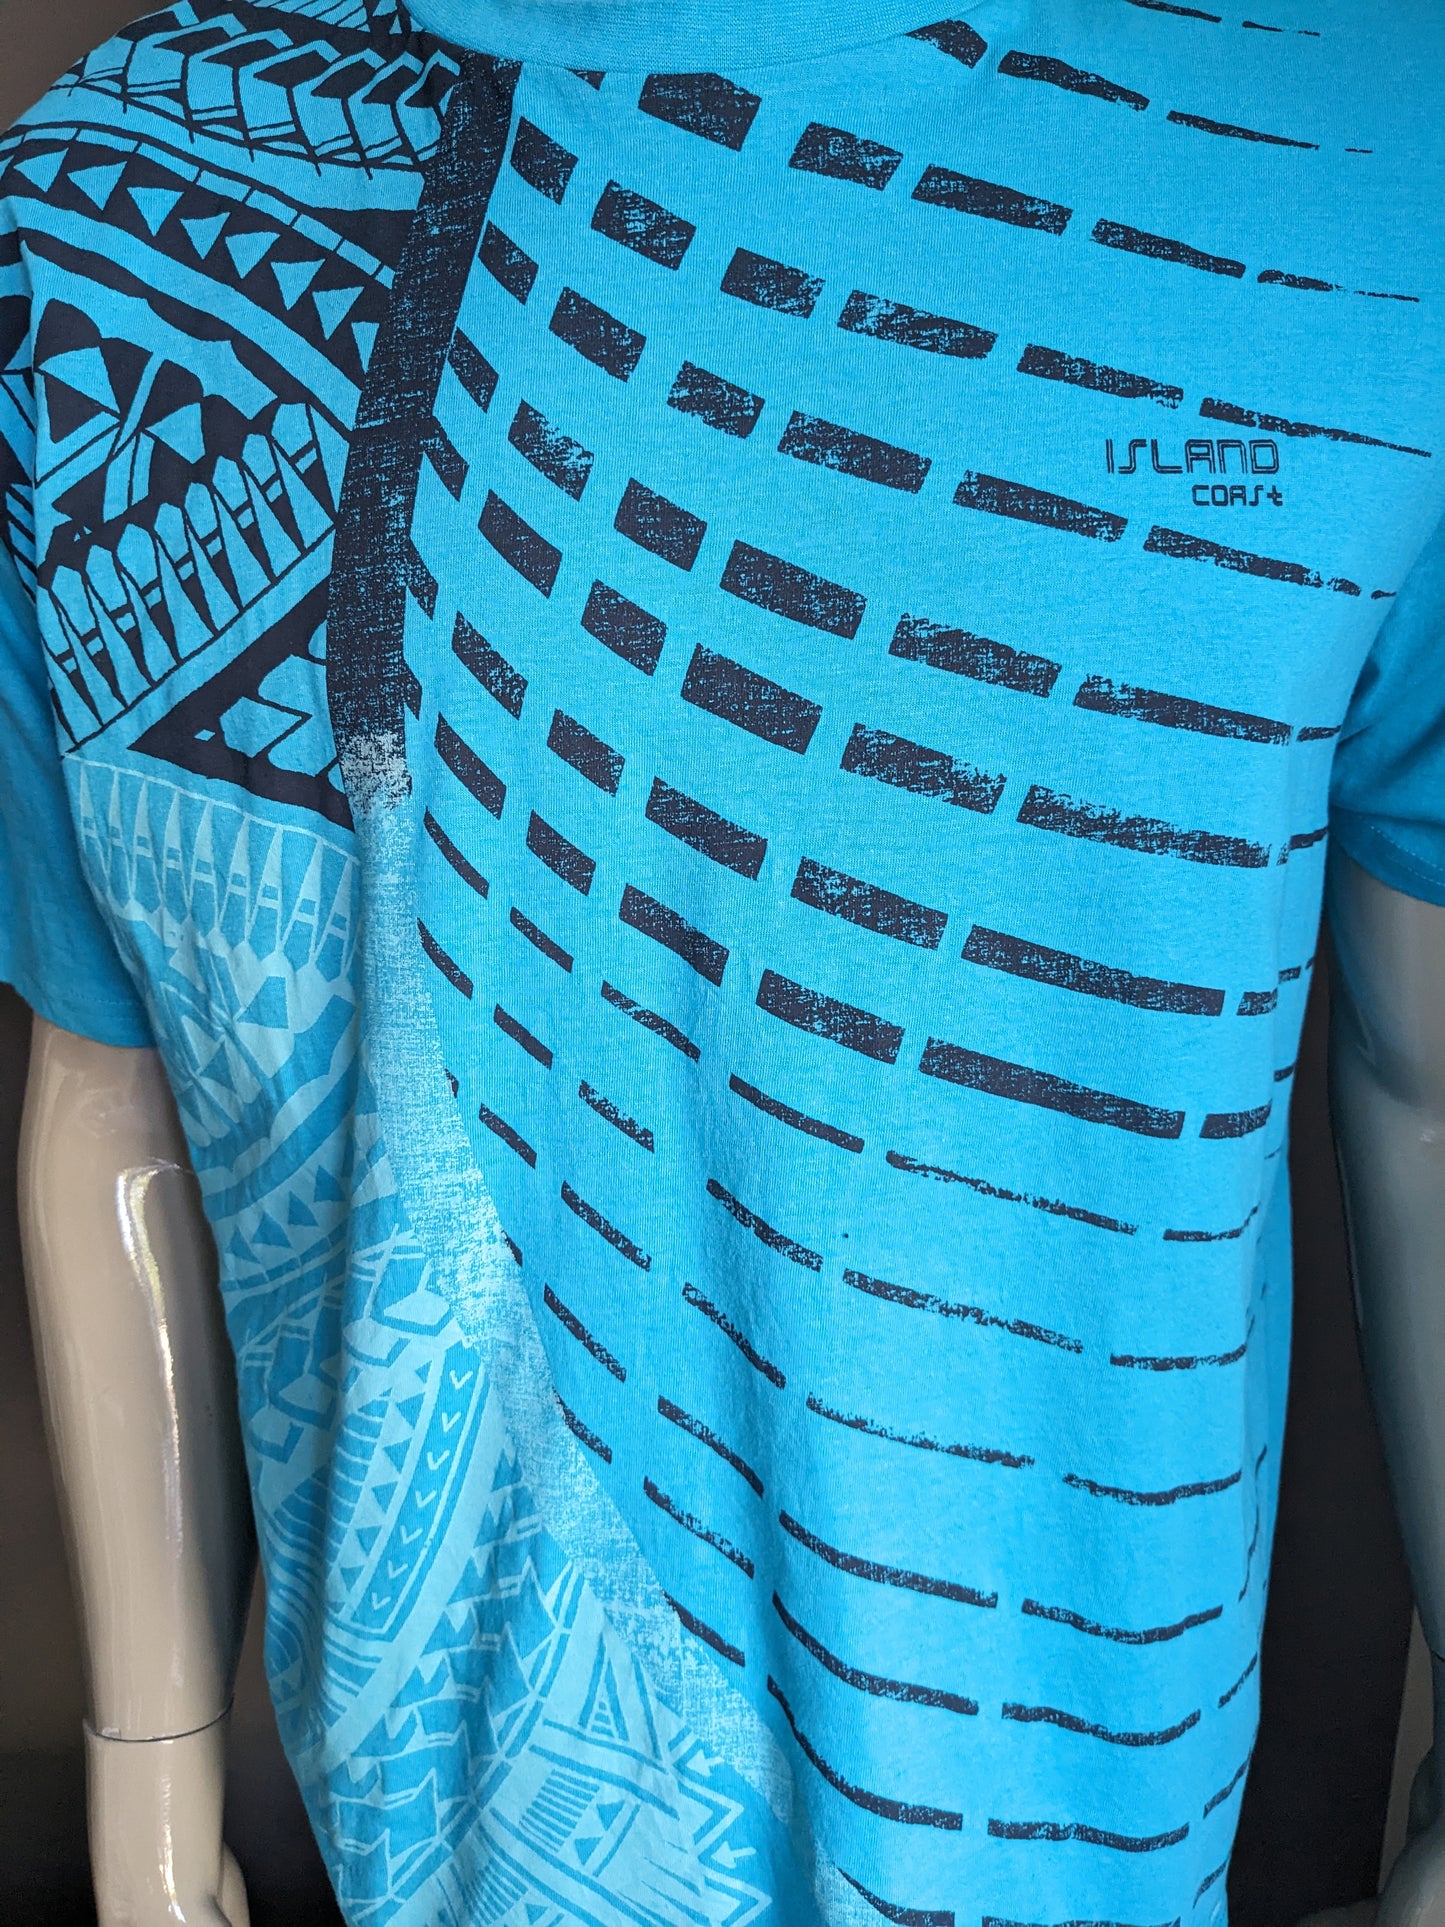 Atlas for Men Shirt. Blu con stampa. Dimensione 3xl / xxxl.